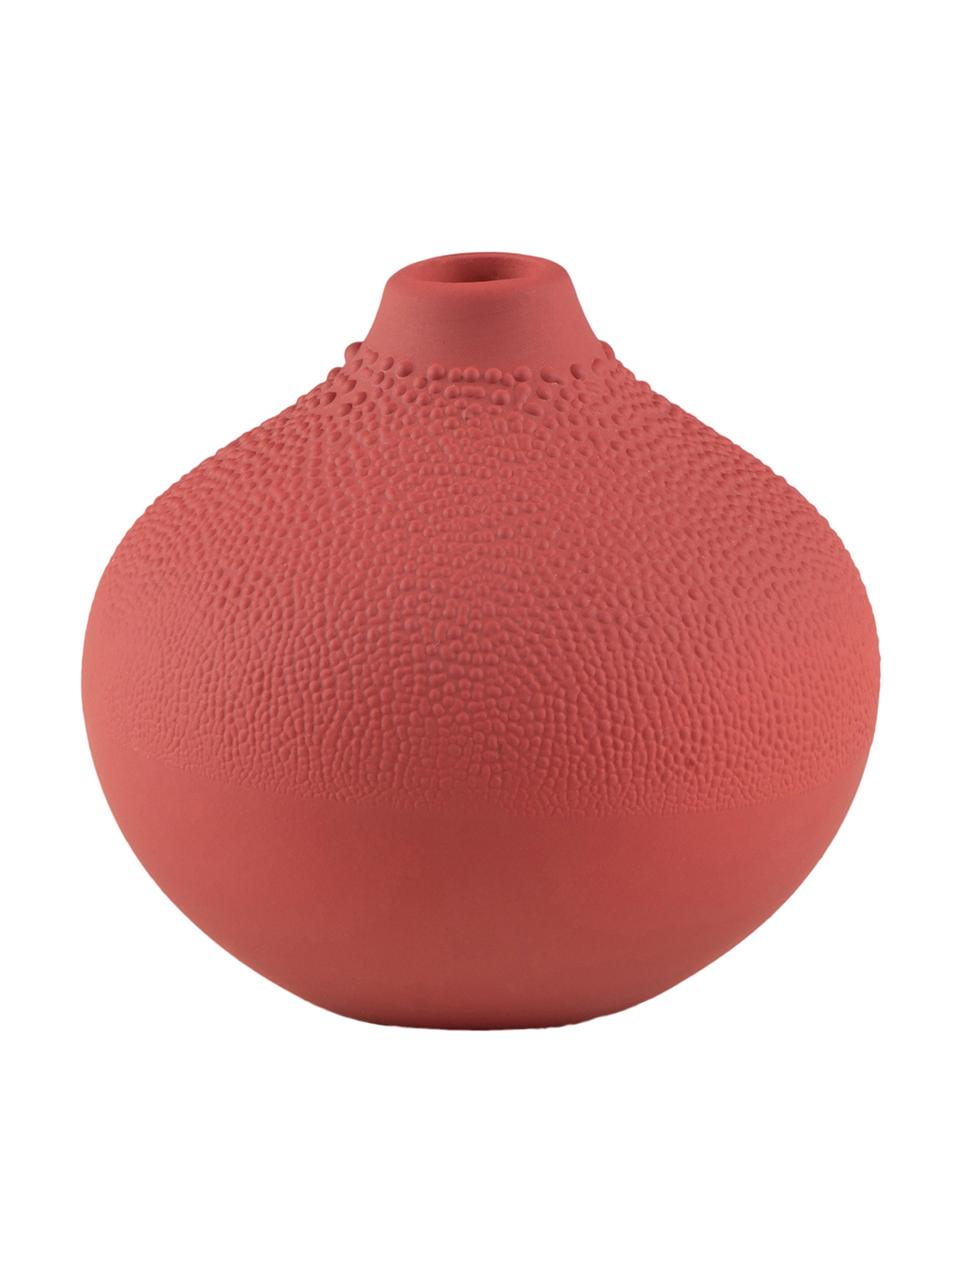 Vaso di design in porcellana Design, Porcellana, Rosso, Ø 7 x Alt. 7 cm